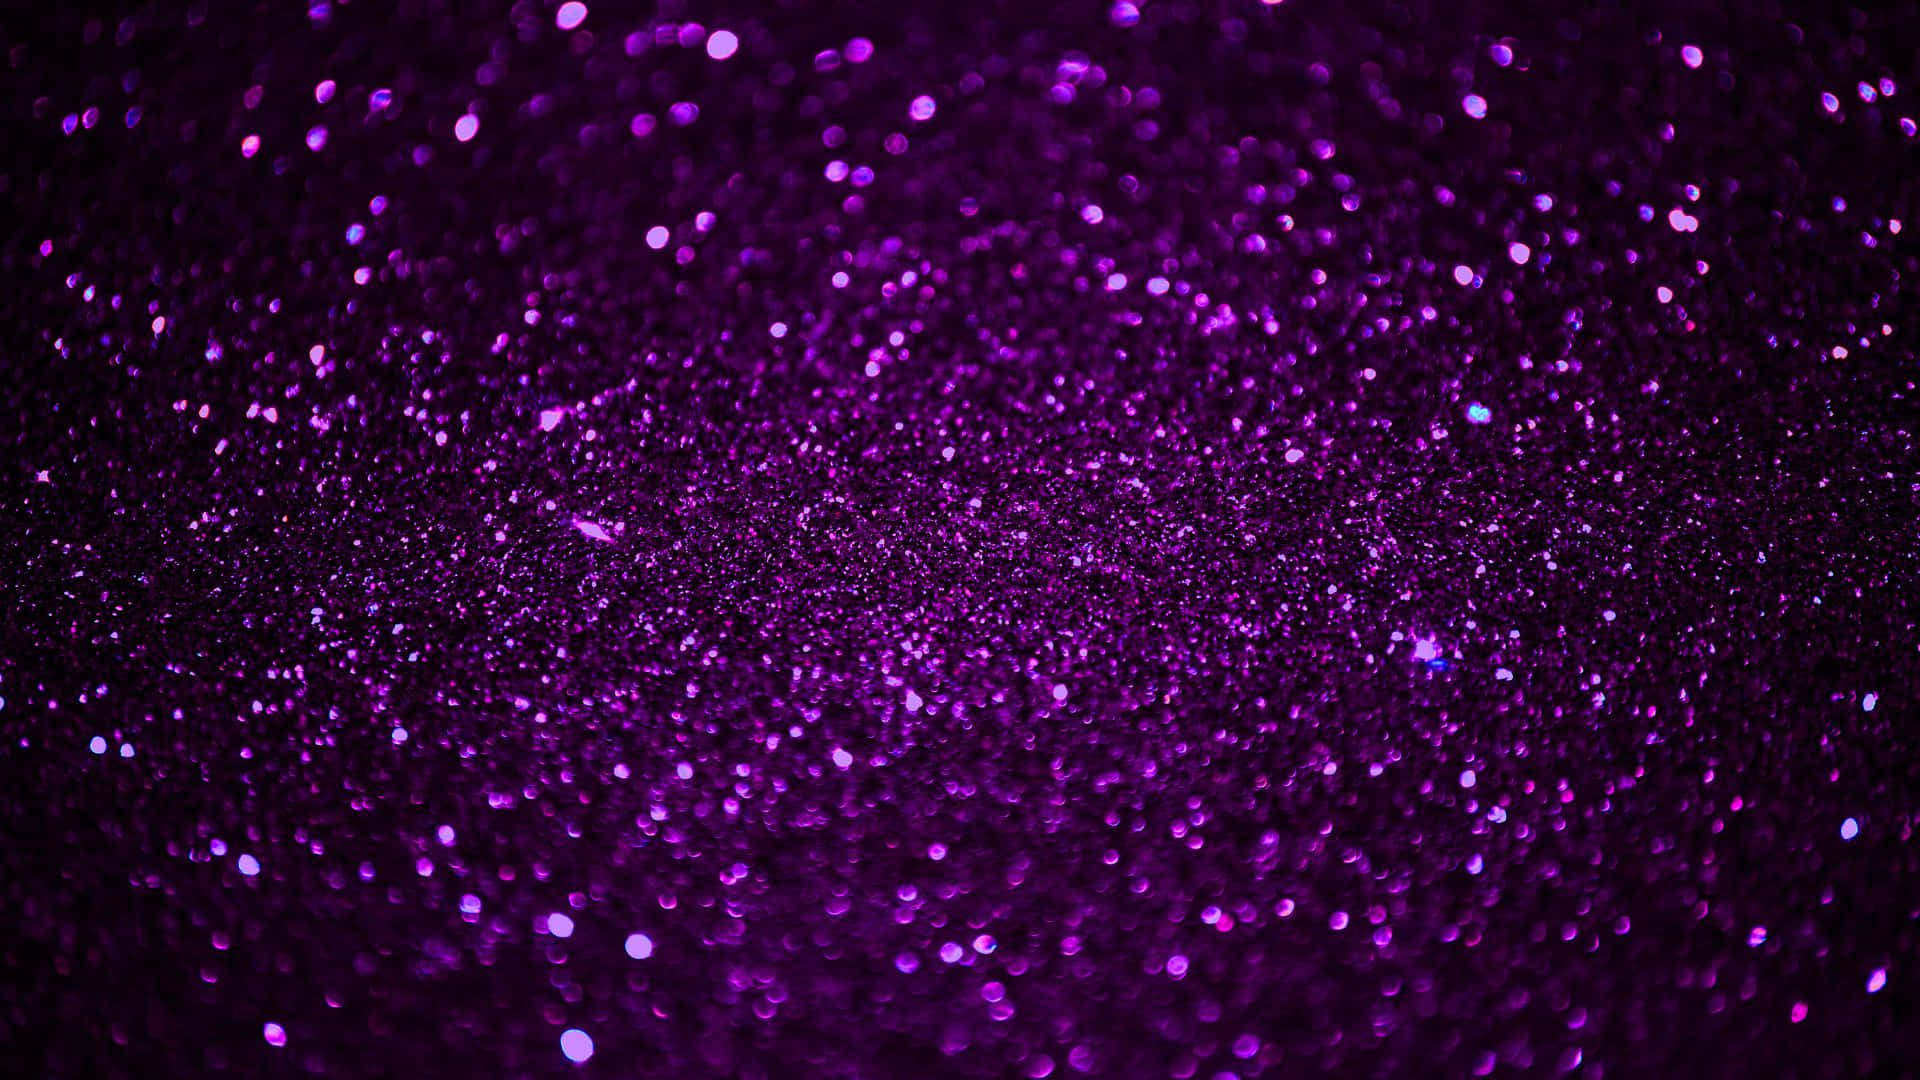 "A brilliant background of purple sparkles"